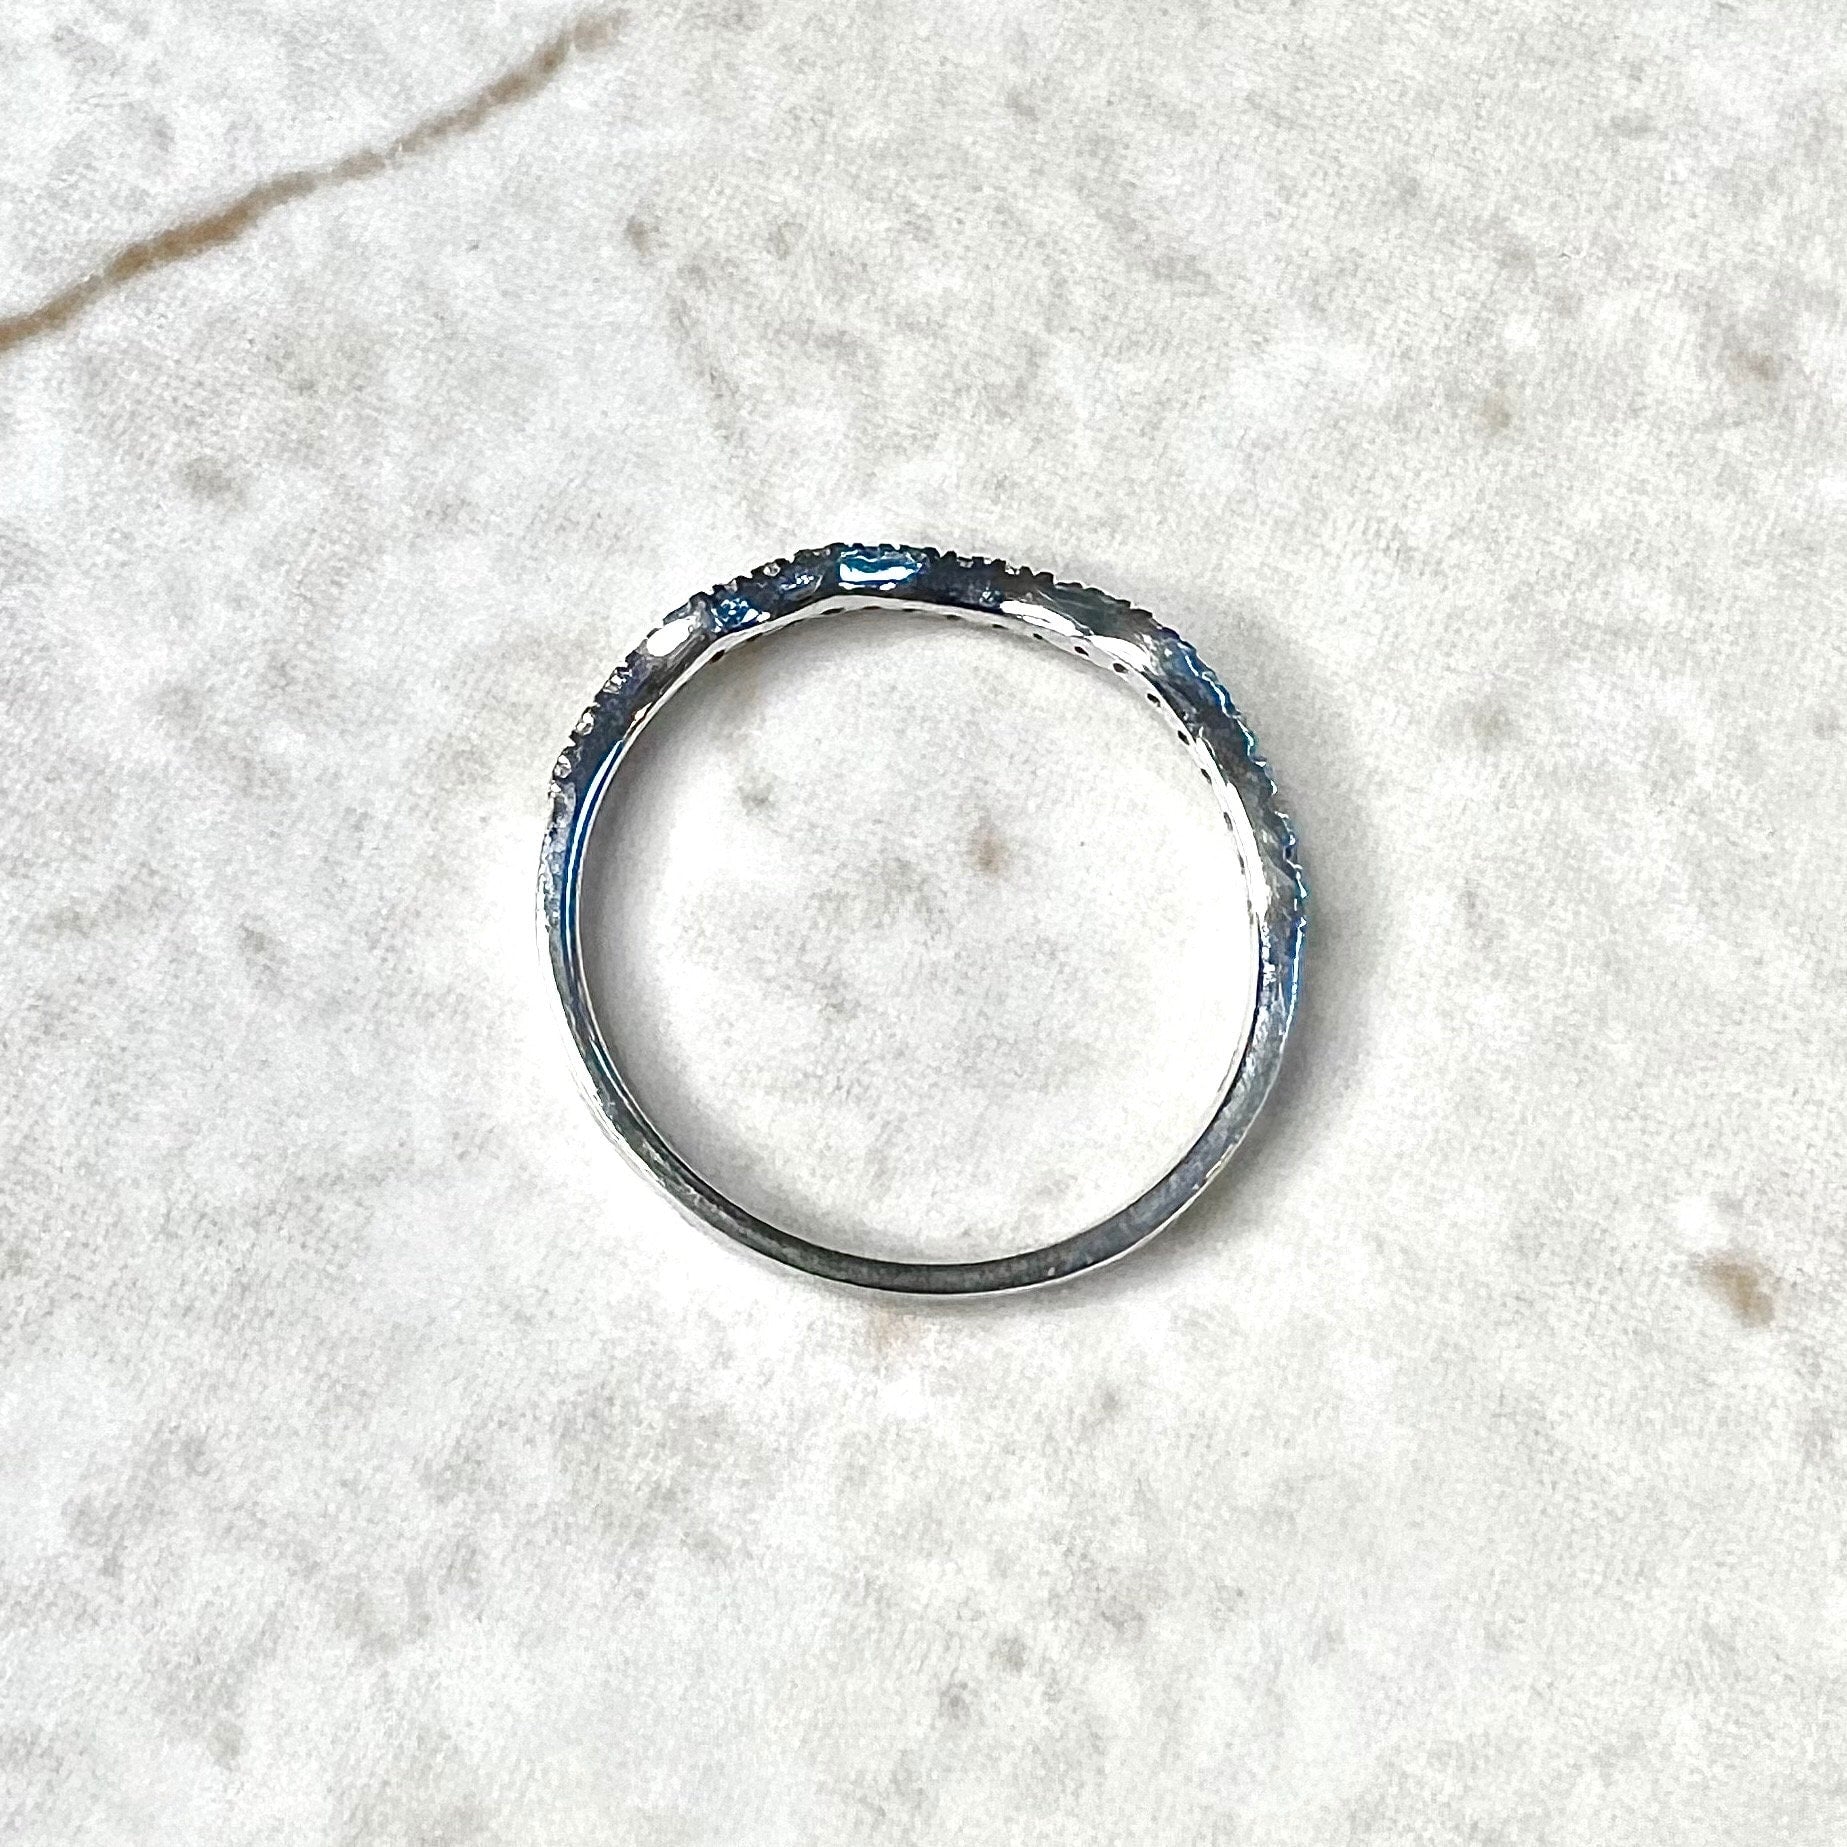 10K Diamond Half Eternity Band Ring - 10K White Gold Diamond Wedding Ring - Half Eternity Ring - Stackable Ring - Anniversary Gifts For Her